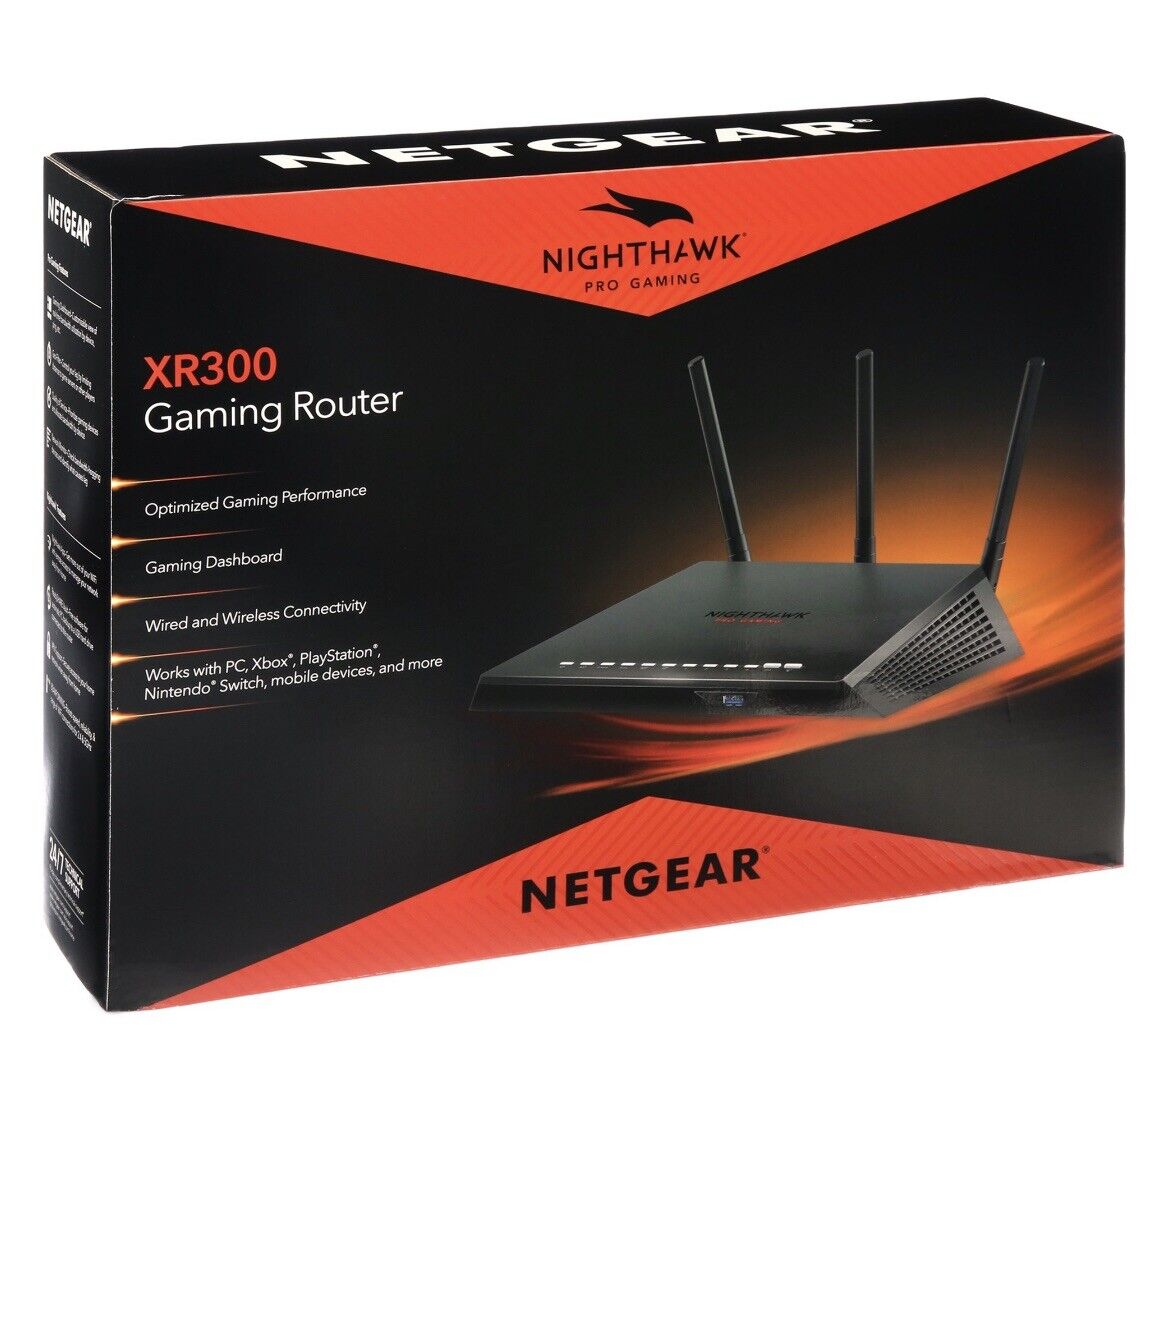 NETGEAR XR300 Nighthawk Pro Gaming Router, XR300-100NAS, Black